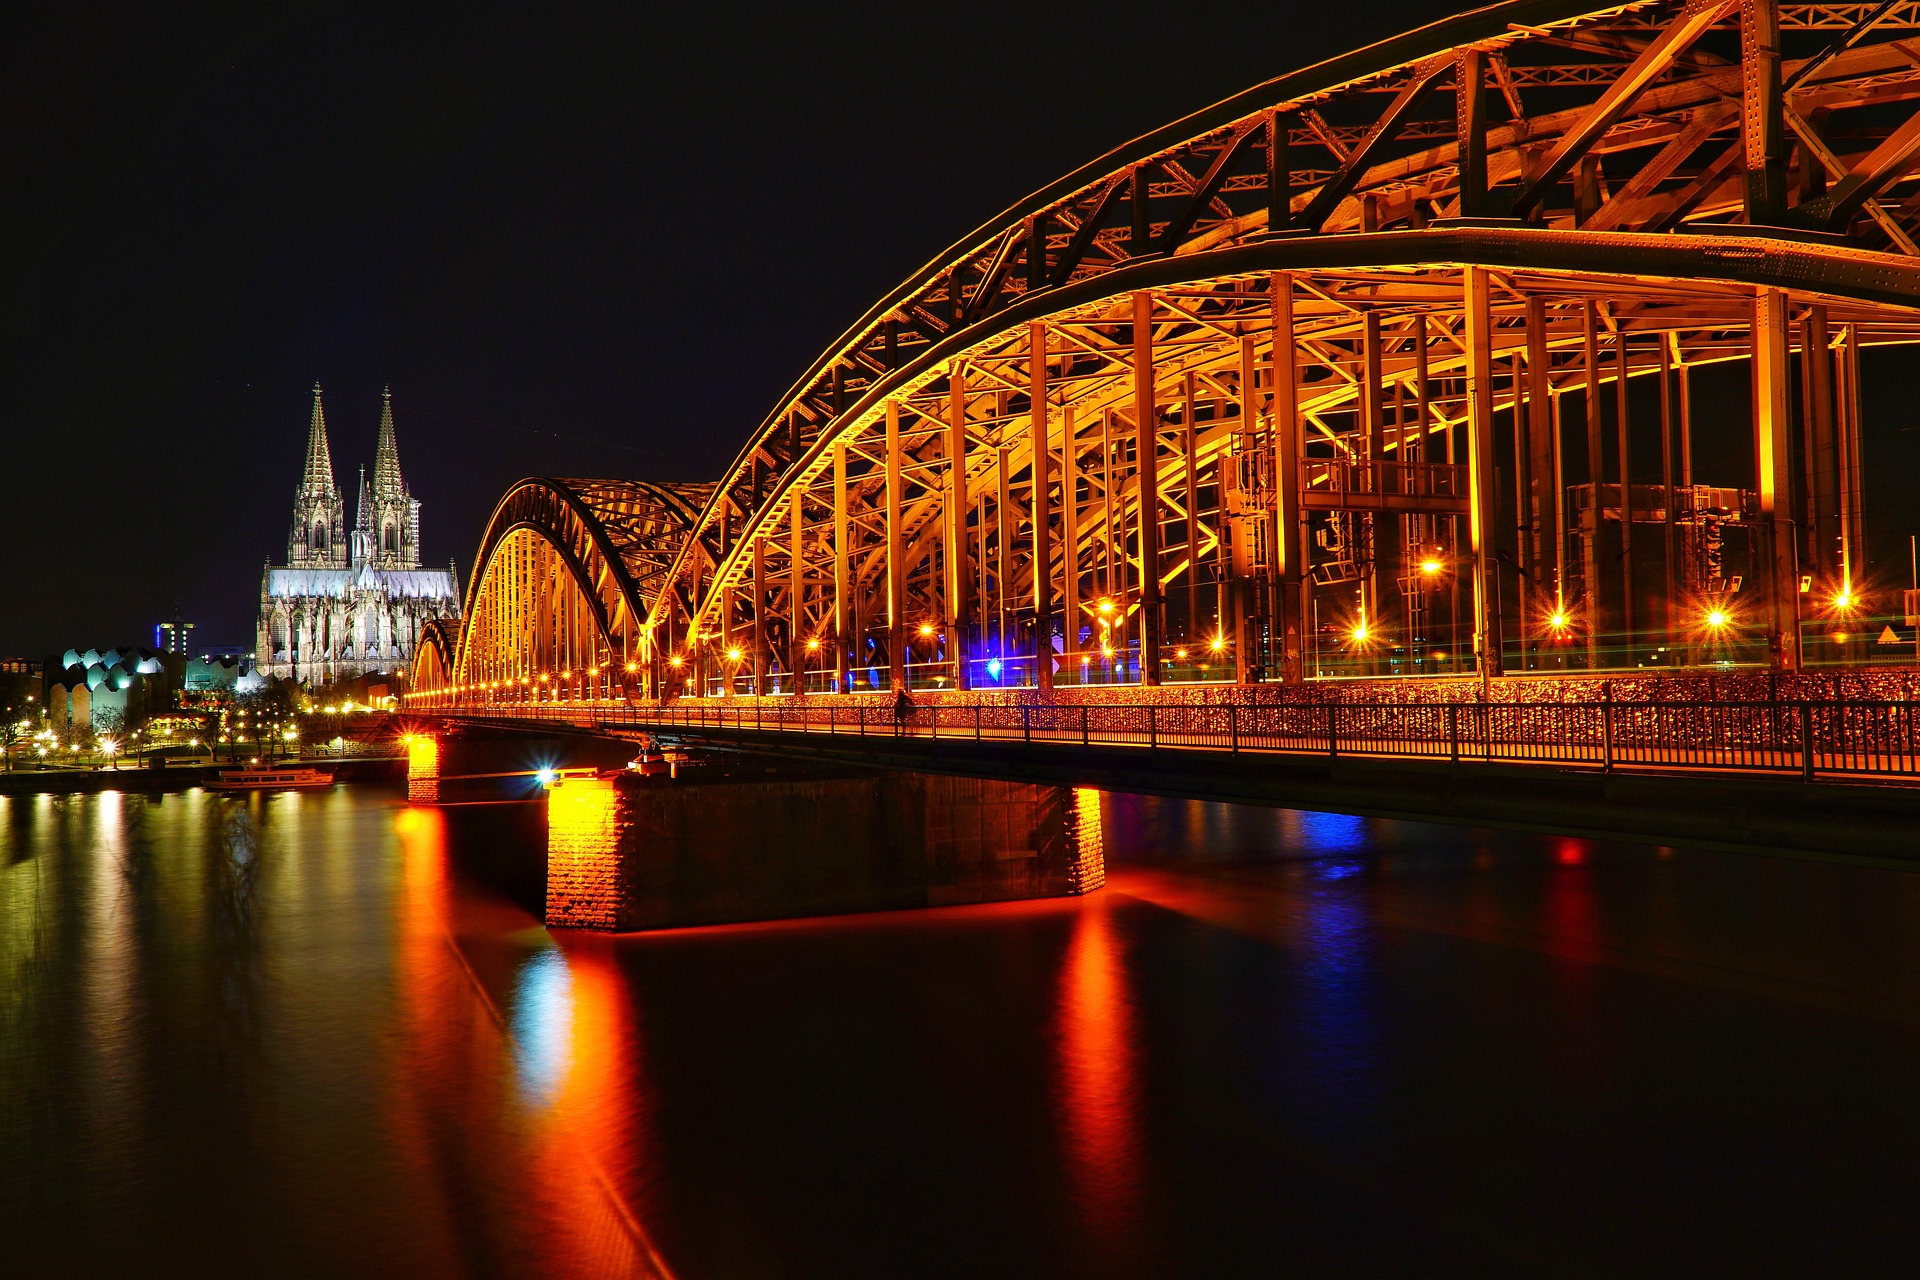 A bridge in Cologne at night